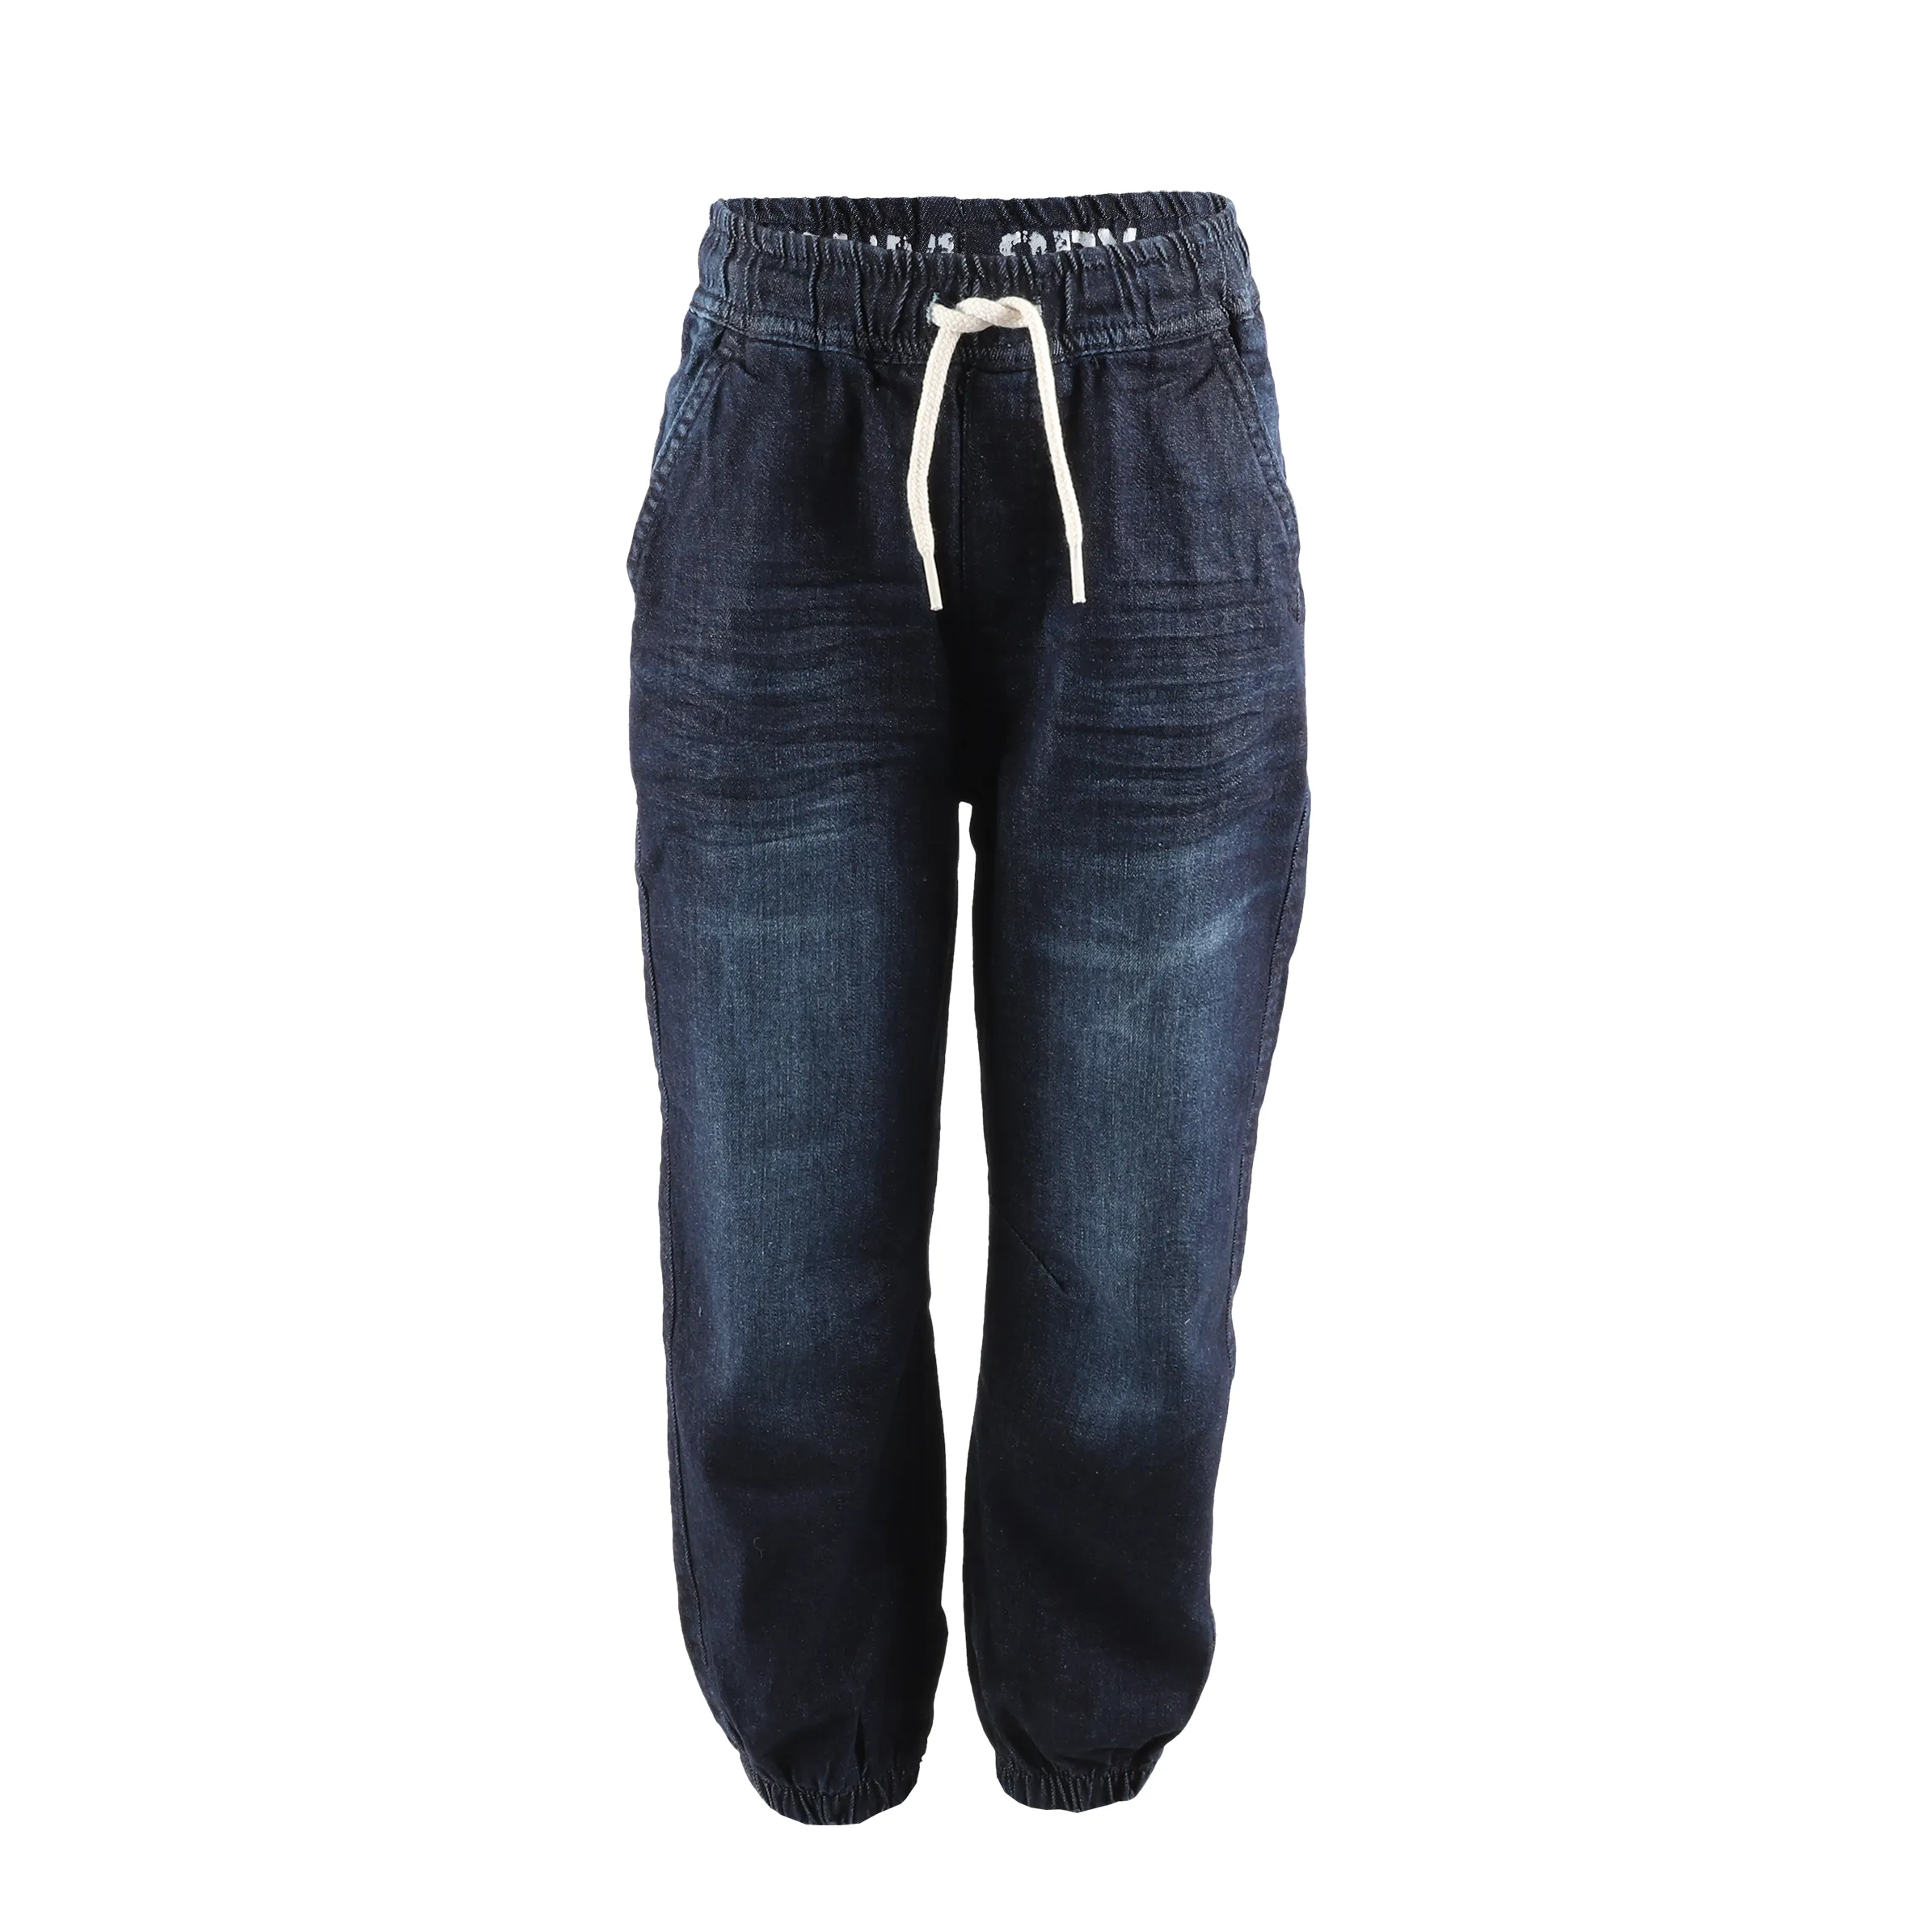 Stop + Go KJ Jeans mit Gummibund in midblue Blau 890804 MITTELBLAU 1